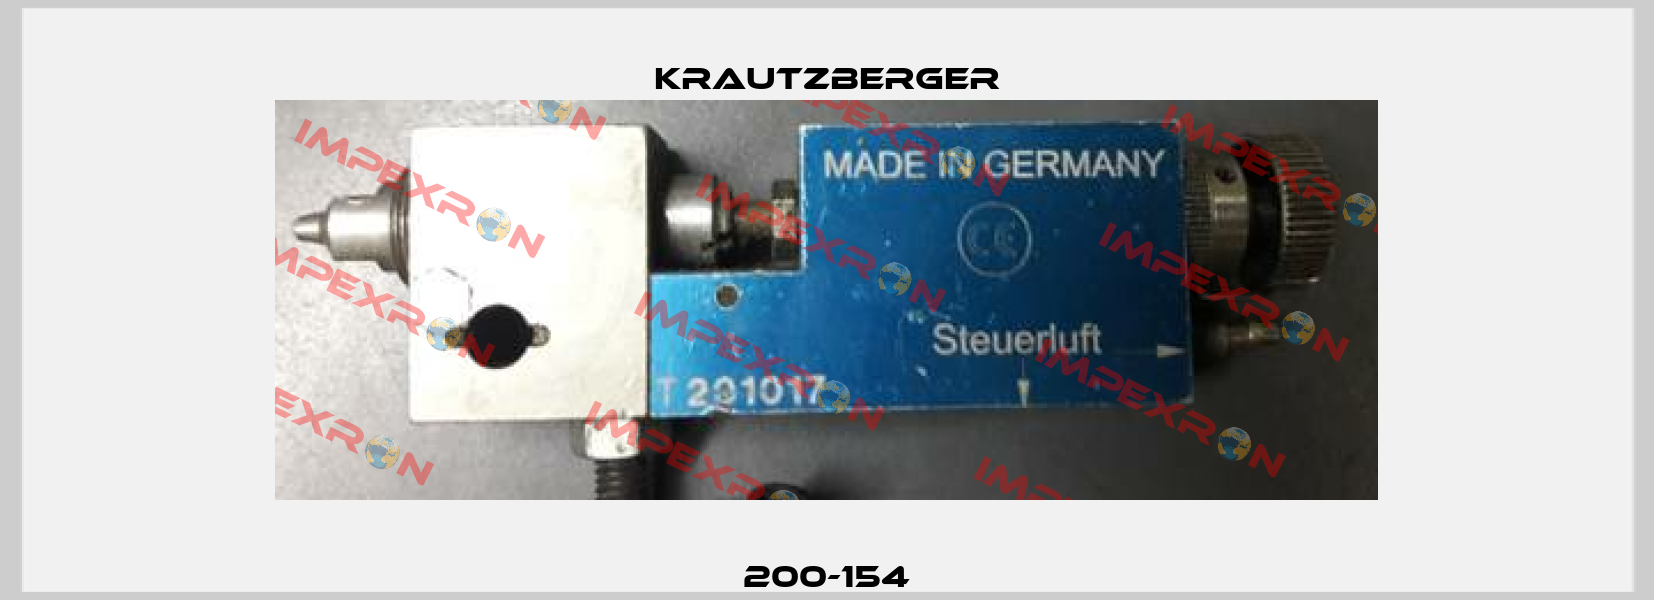 200-154 Krautzberger